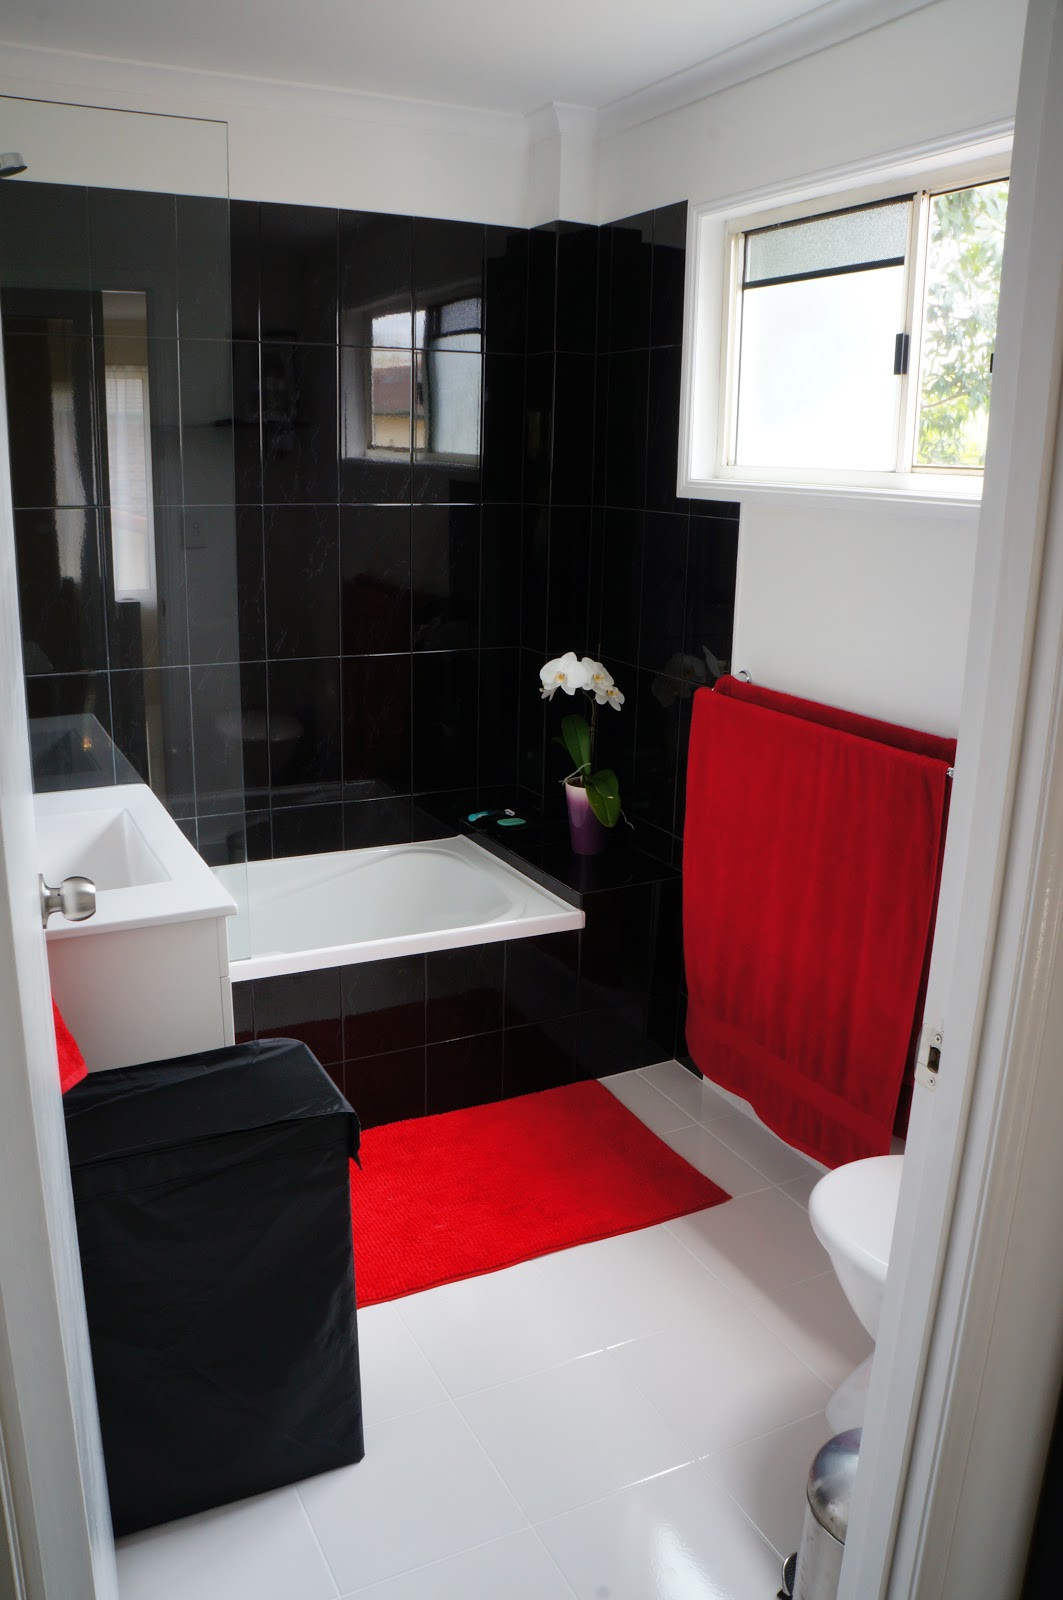 Red Bathroom Decor
 k4j Designs Bathroom reno FINISHED